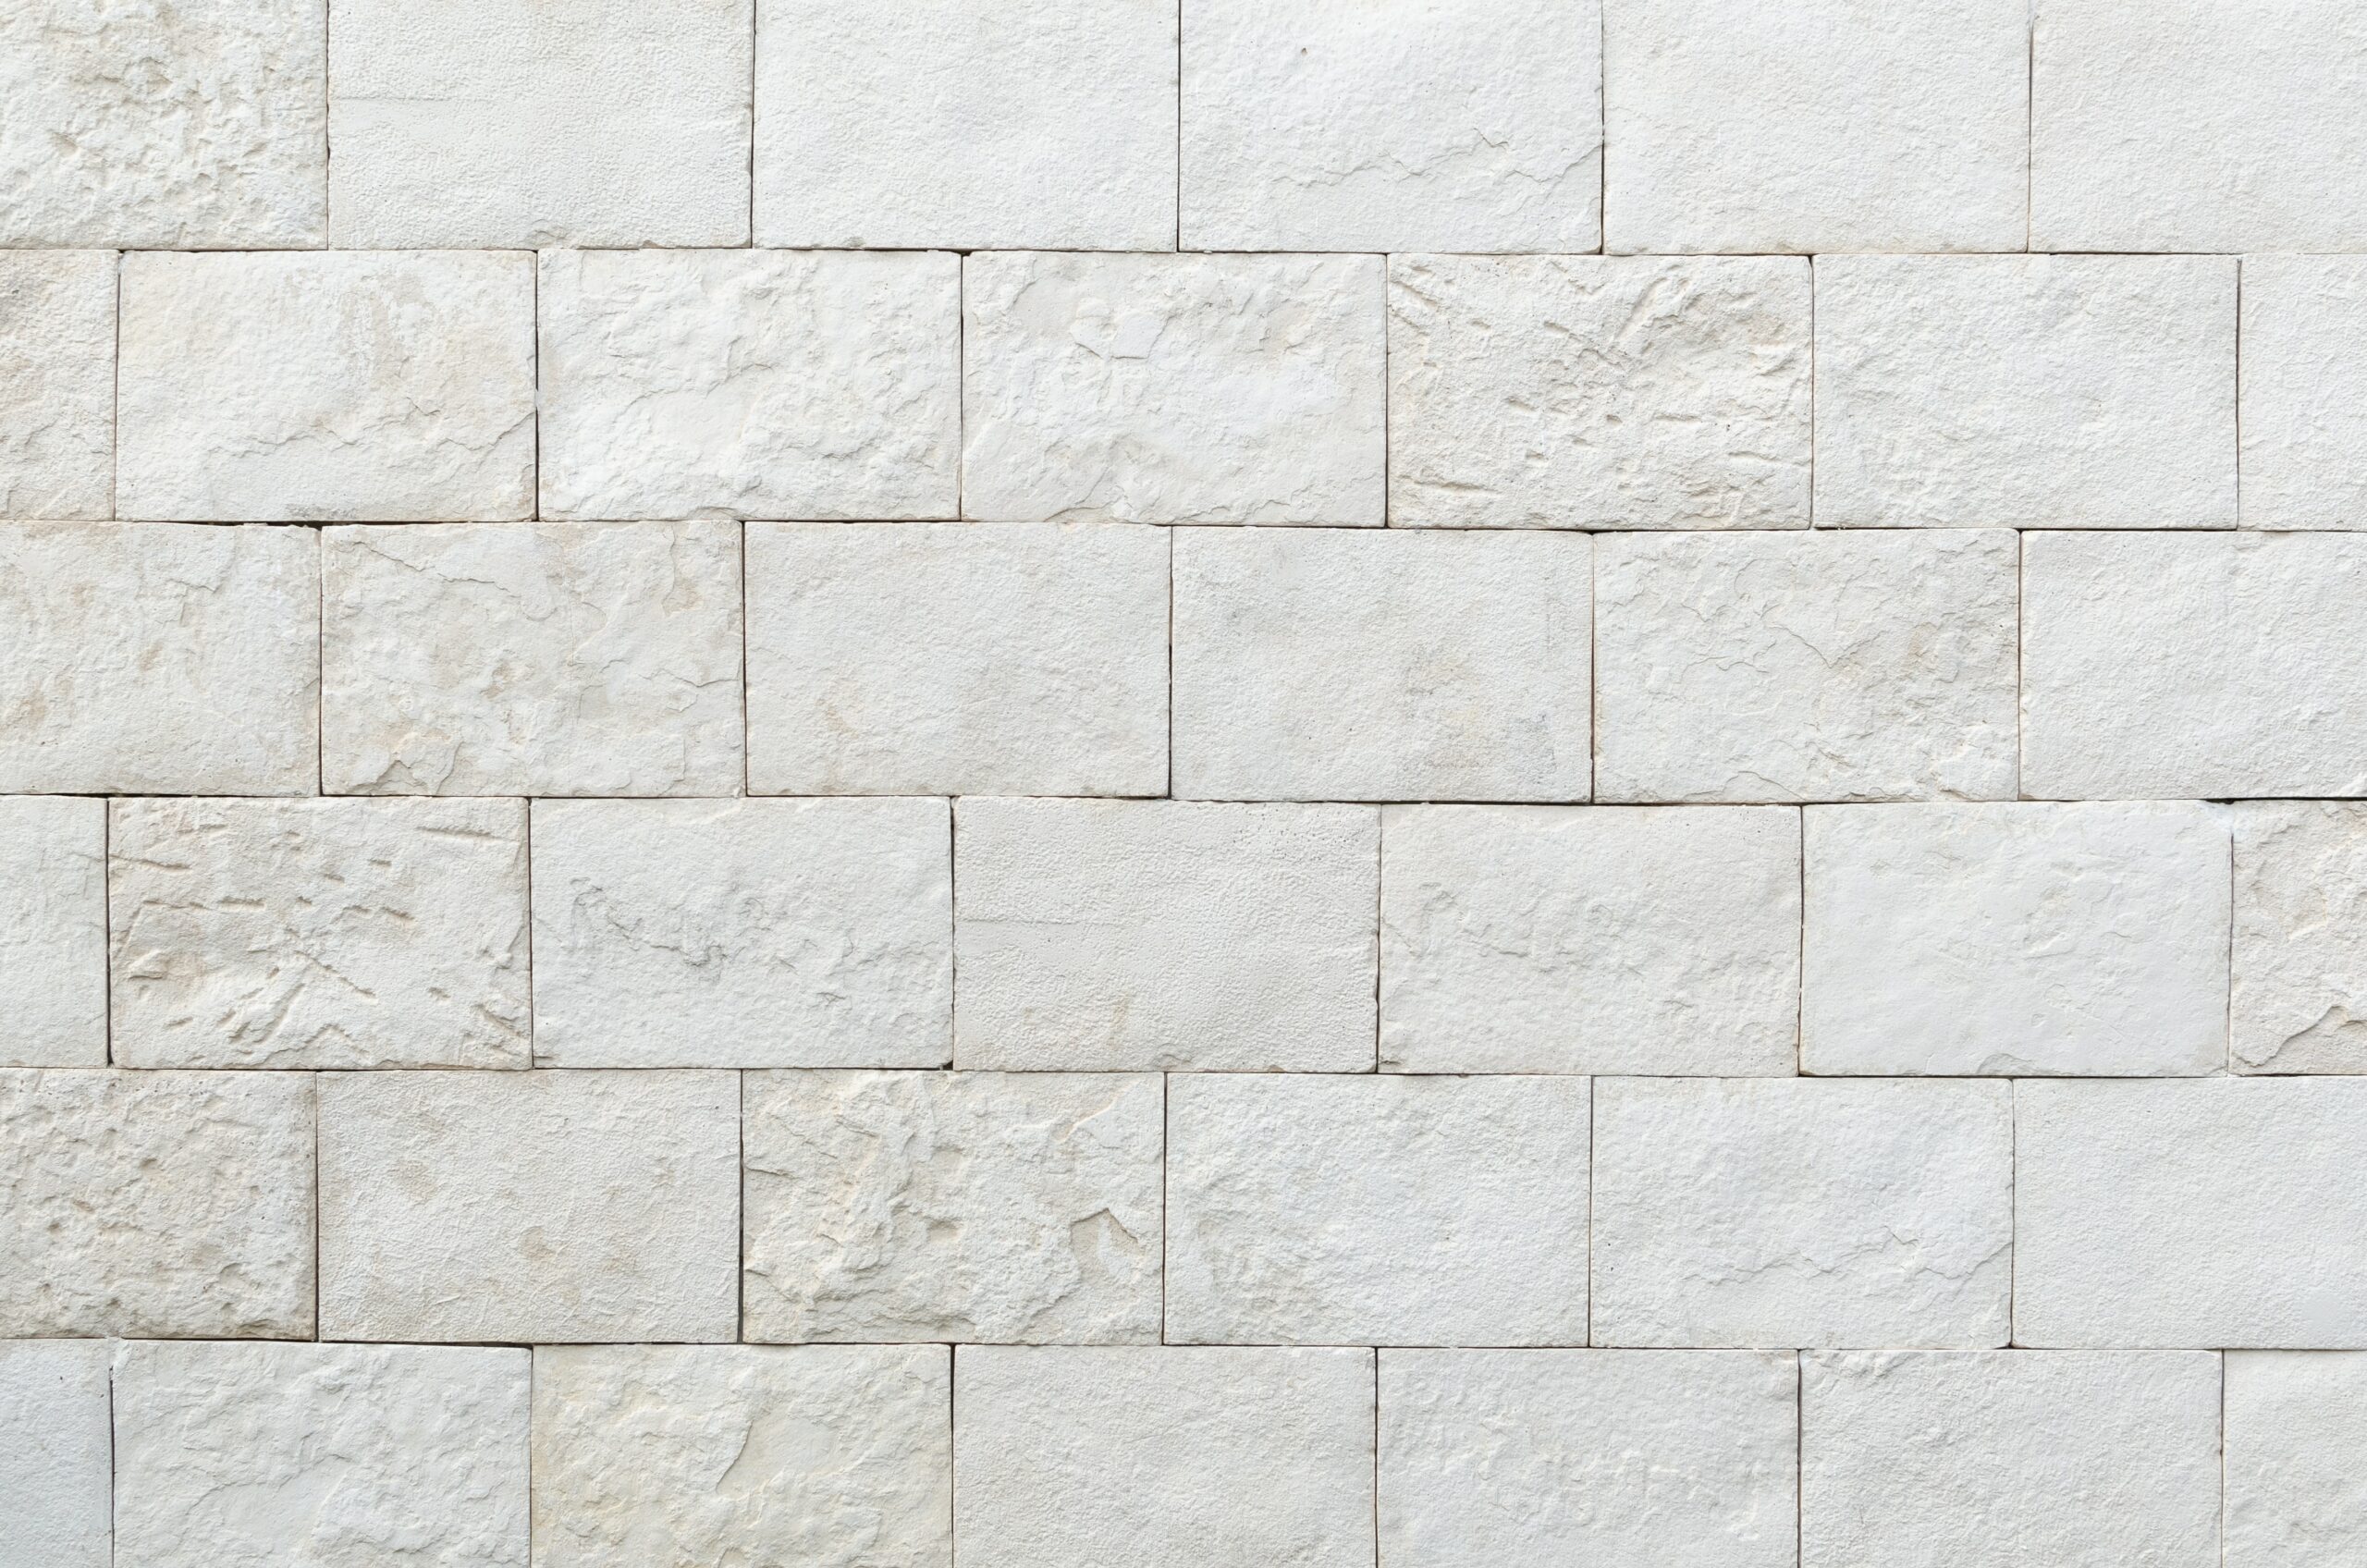 white concrete wall